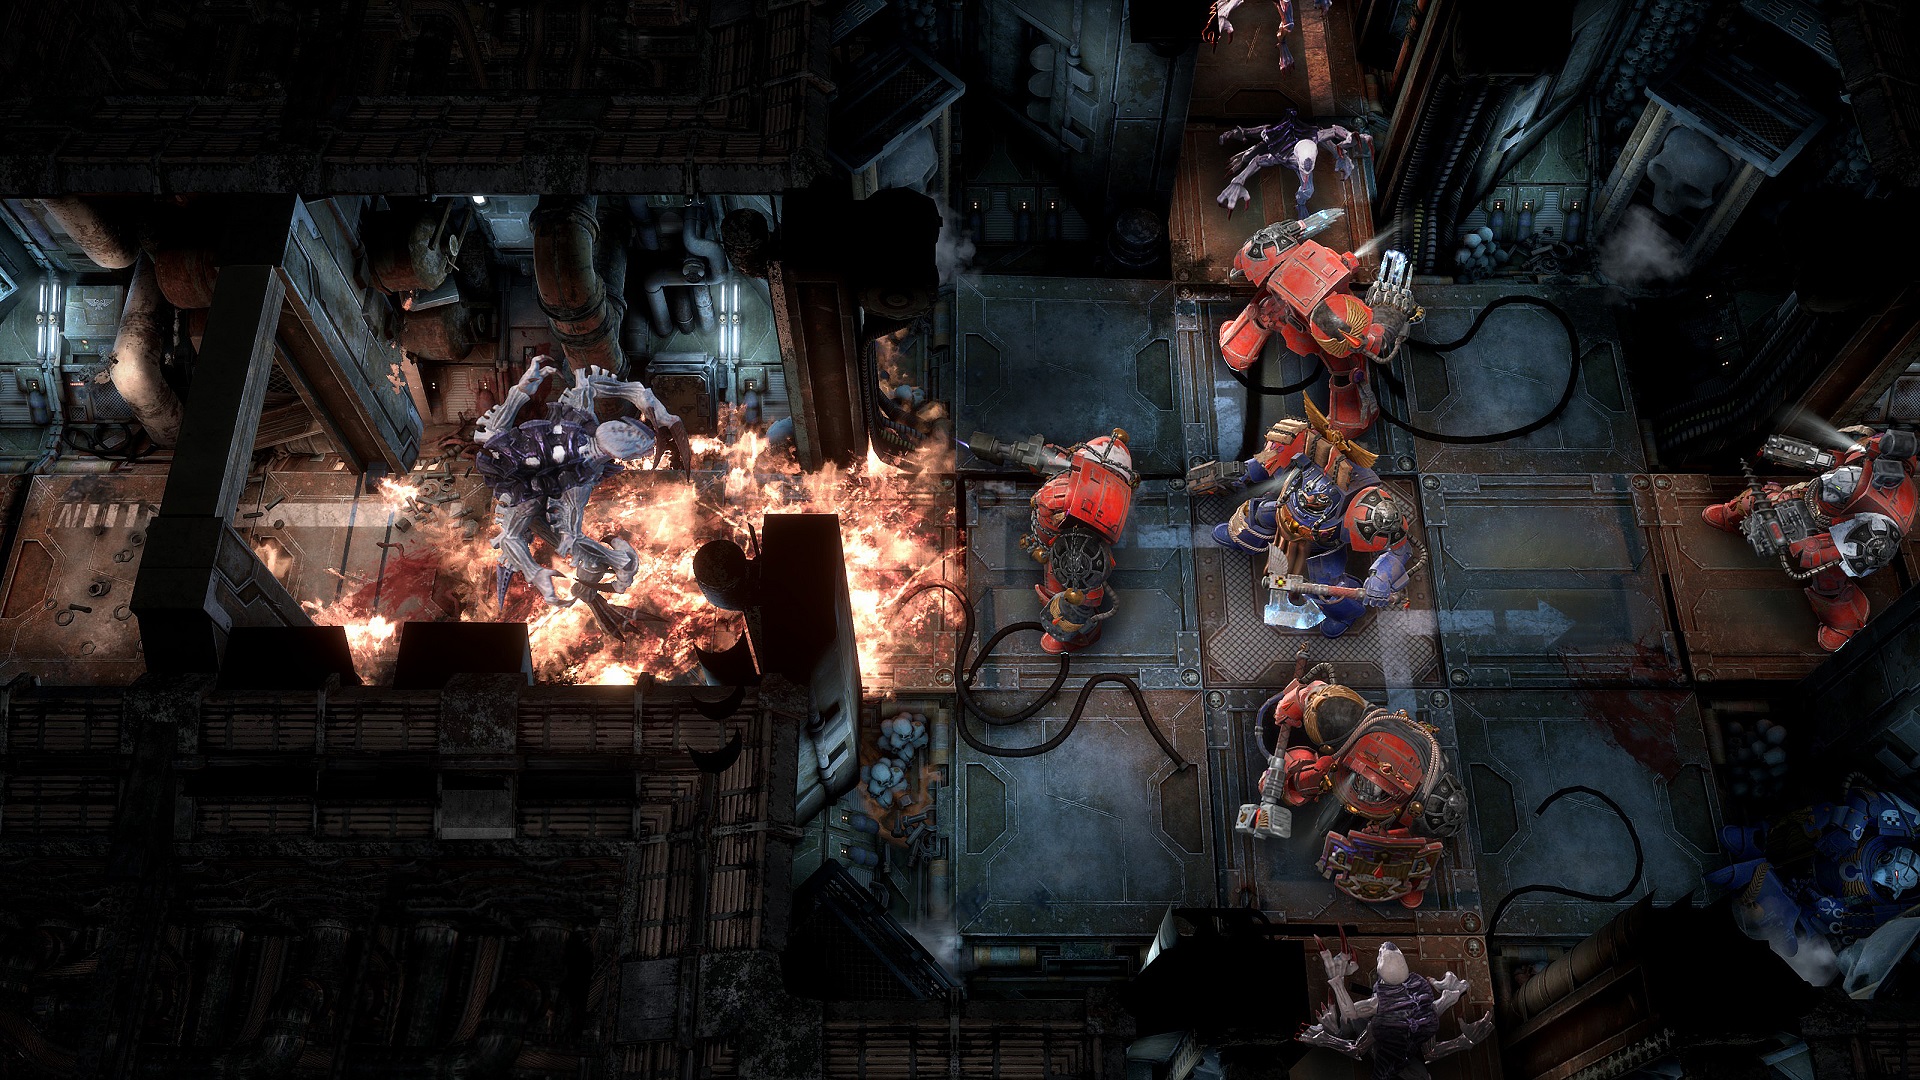 Space Marine Terminators face off against Tyranids in Warhammer 40K game Space Hulk Tactics